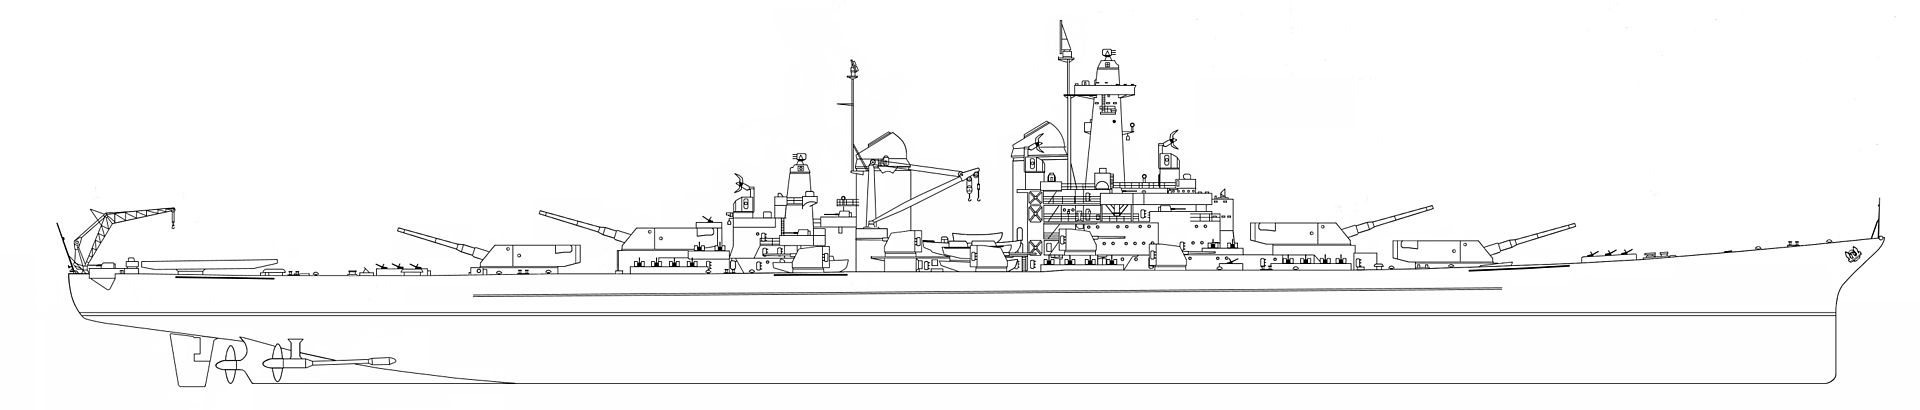 1920px-USS_Montana_line_drawing.jpg